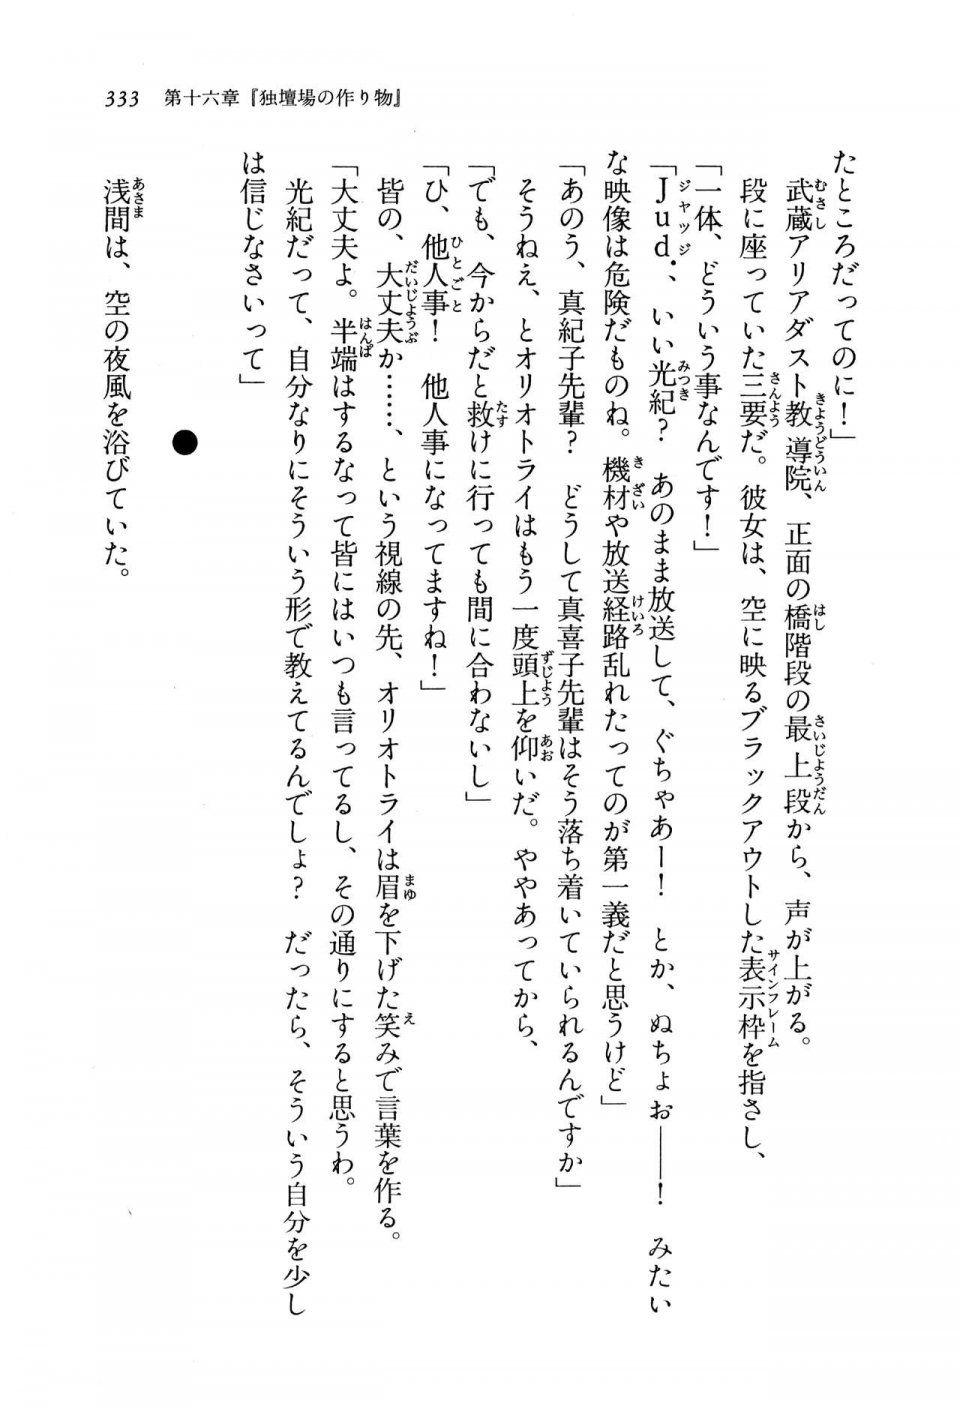 Kyoukai Senjou no Horizon BD Special Mininovel Vol 8(4B) - Photo #337